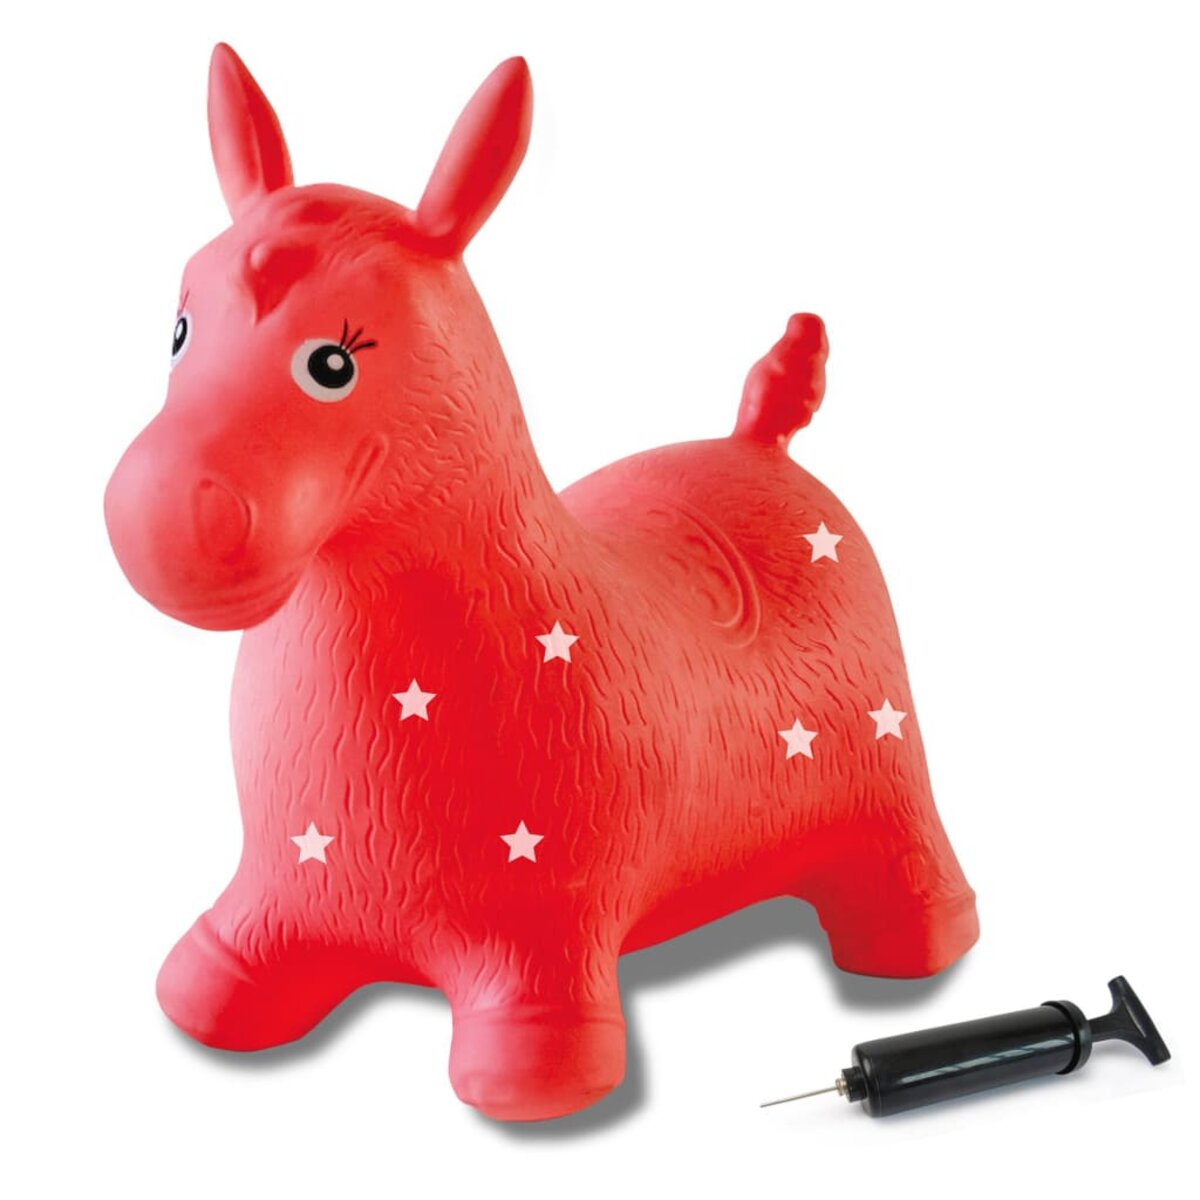 Jamara cheval jouet rebondissant avec pompe marron - La Poste